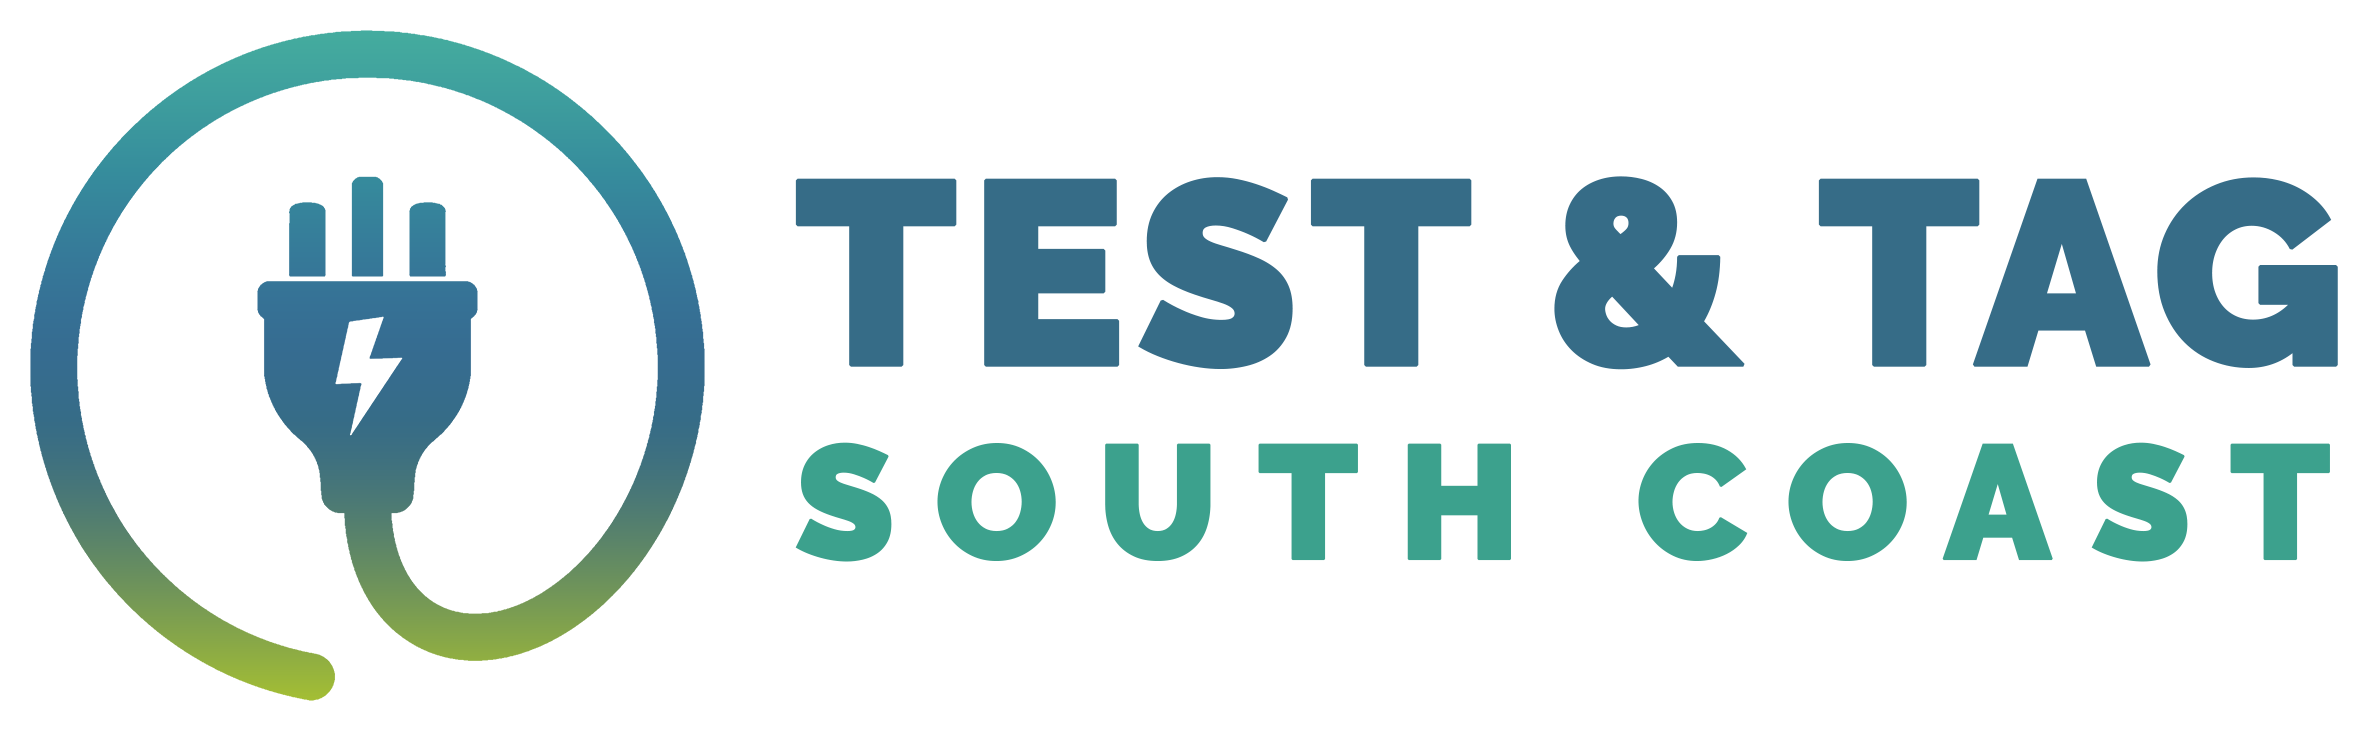 Test and Tag South Coast